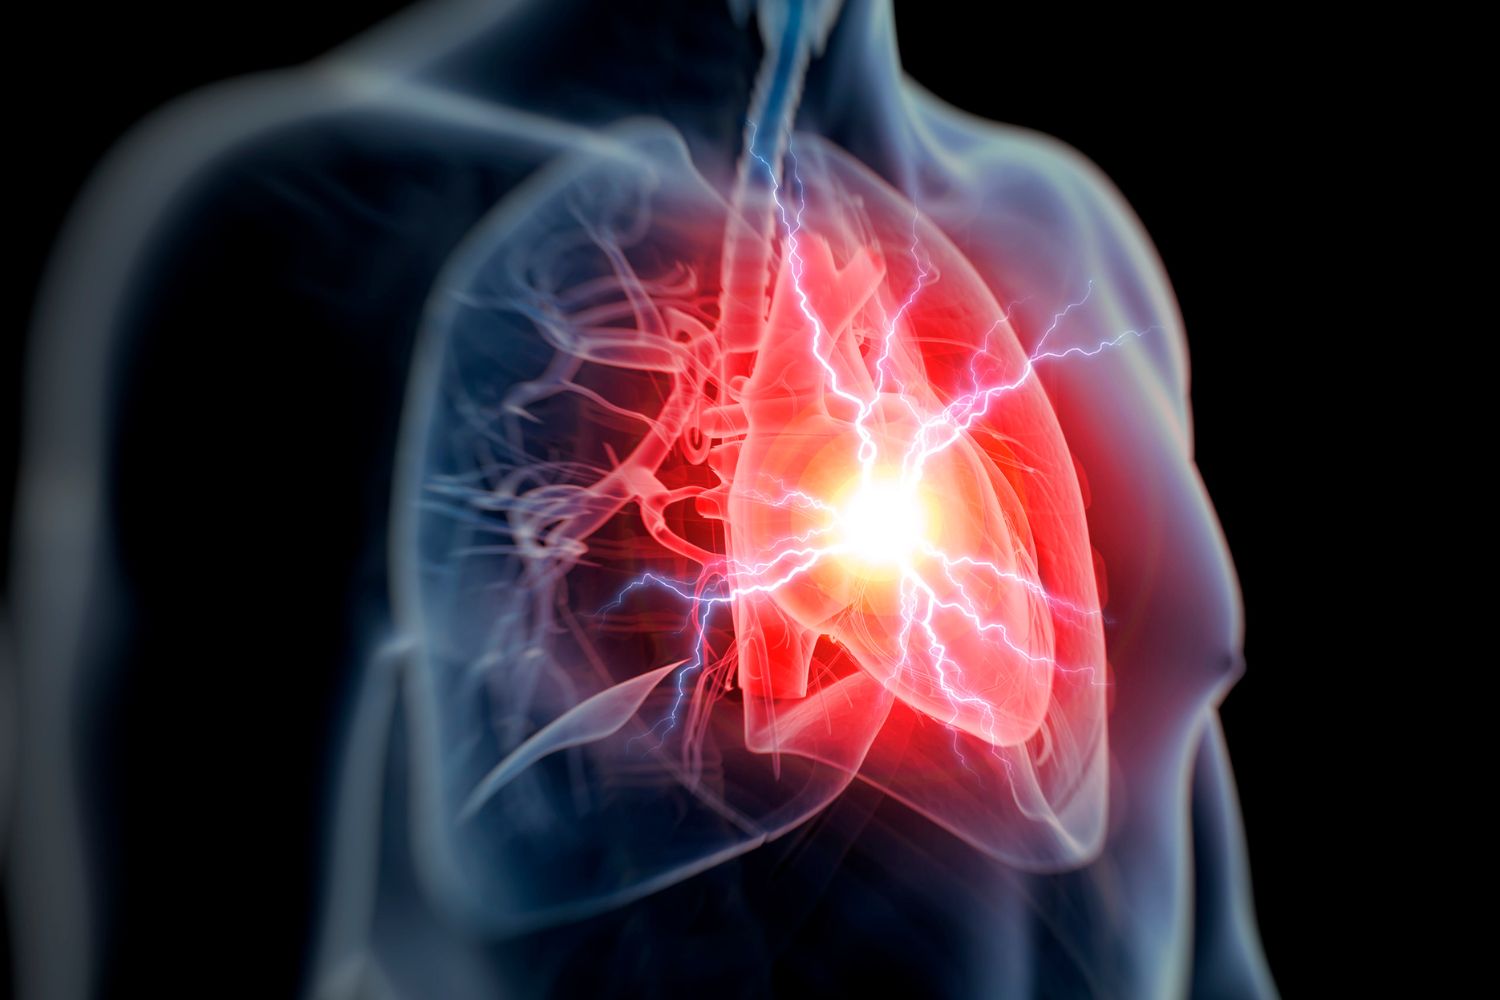 Cardiovascular clinical trials